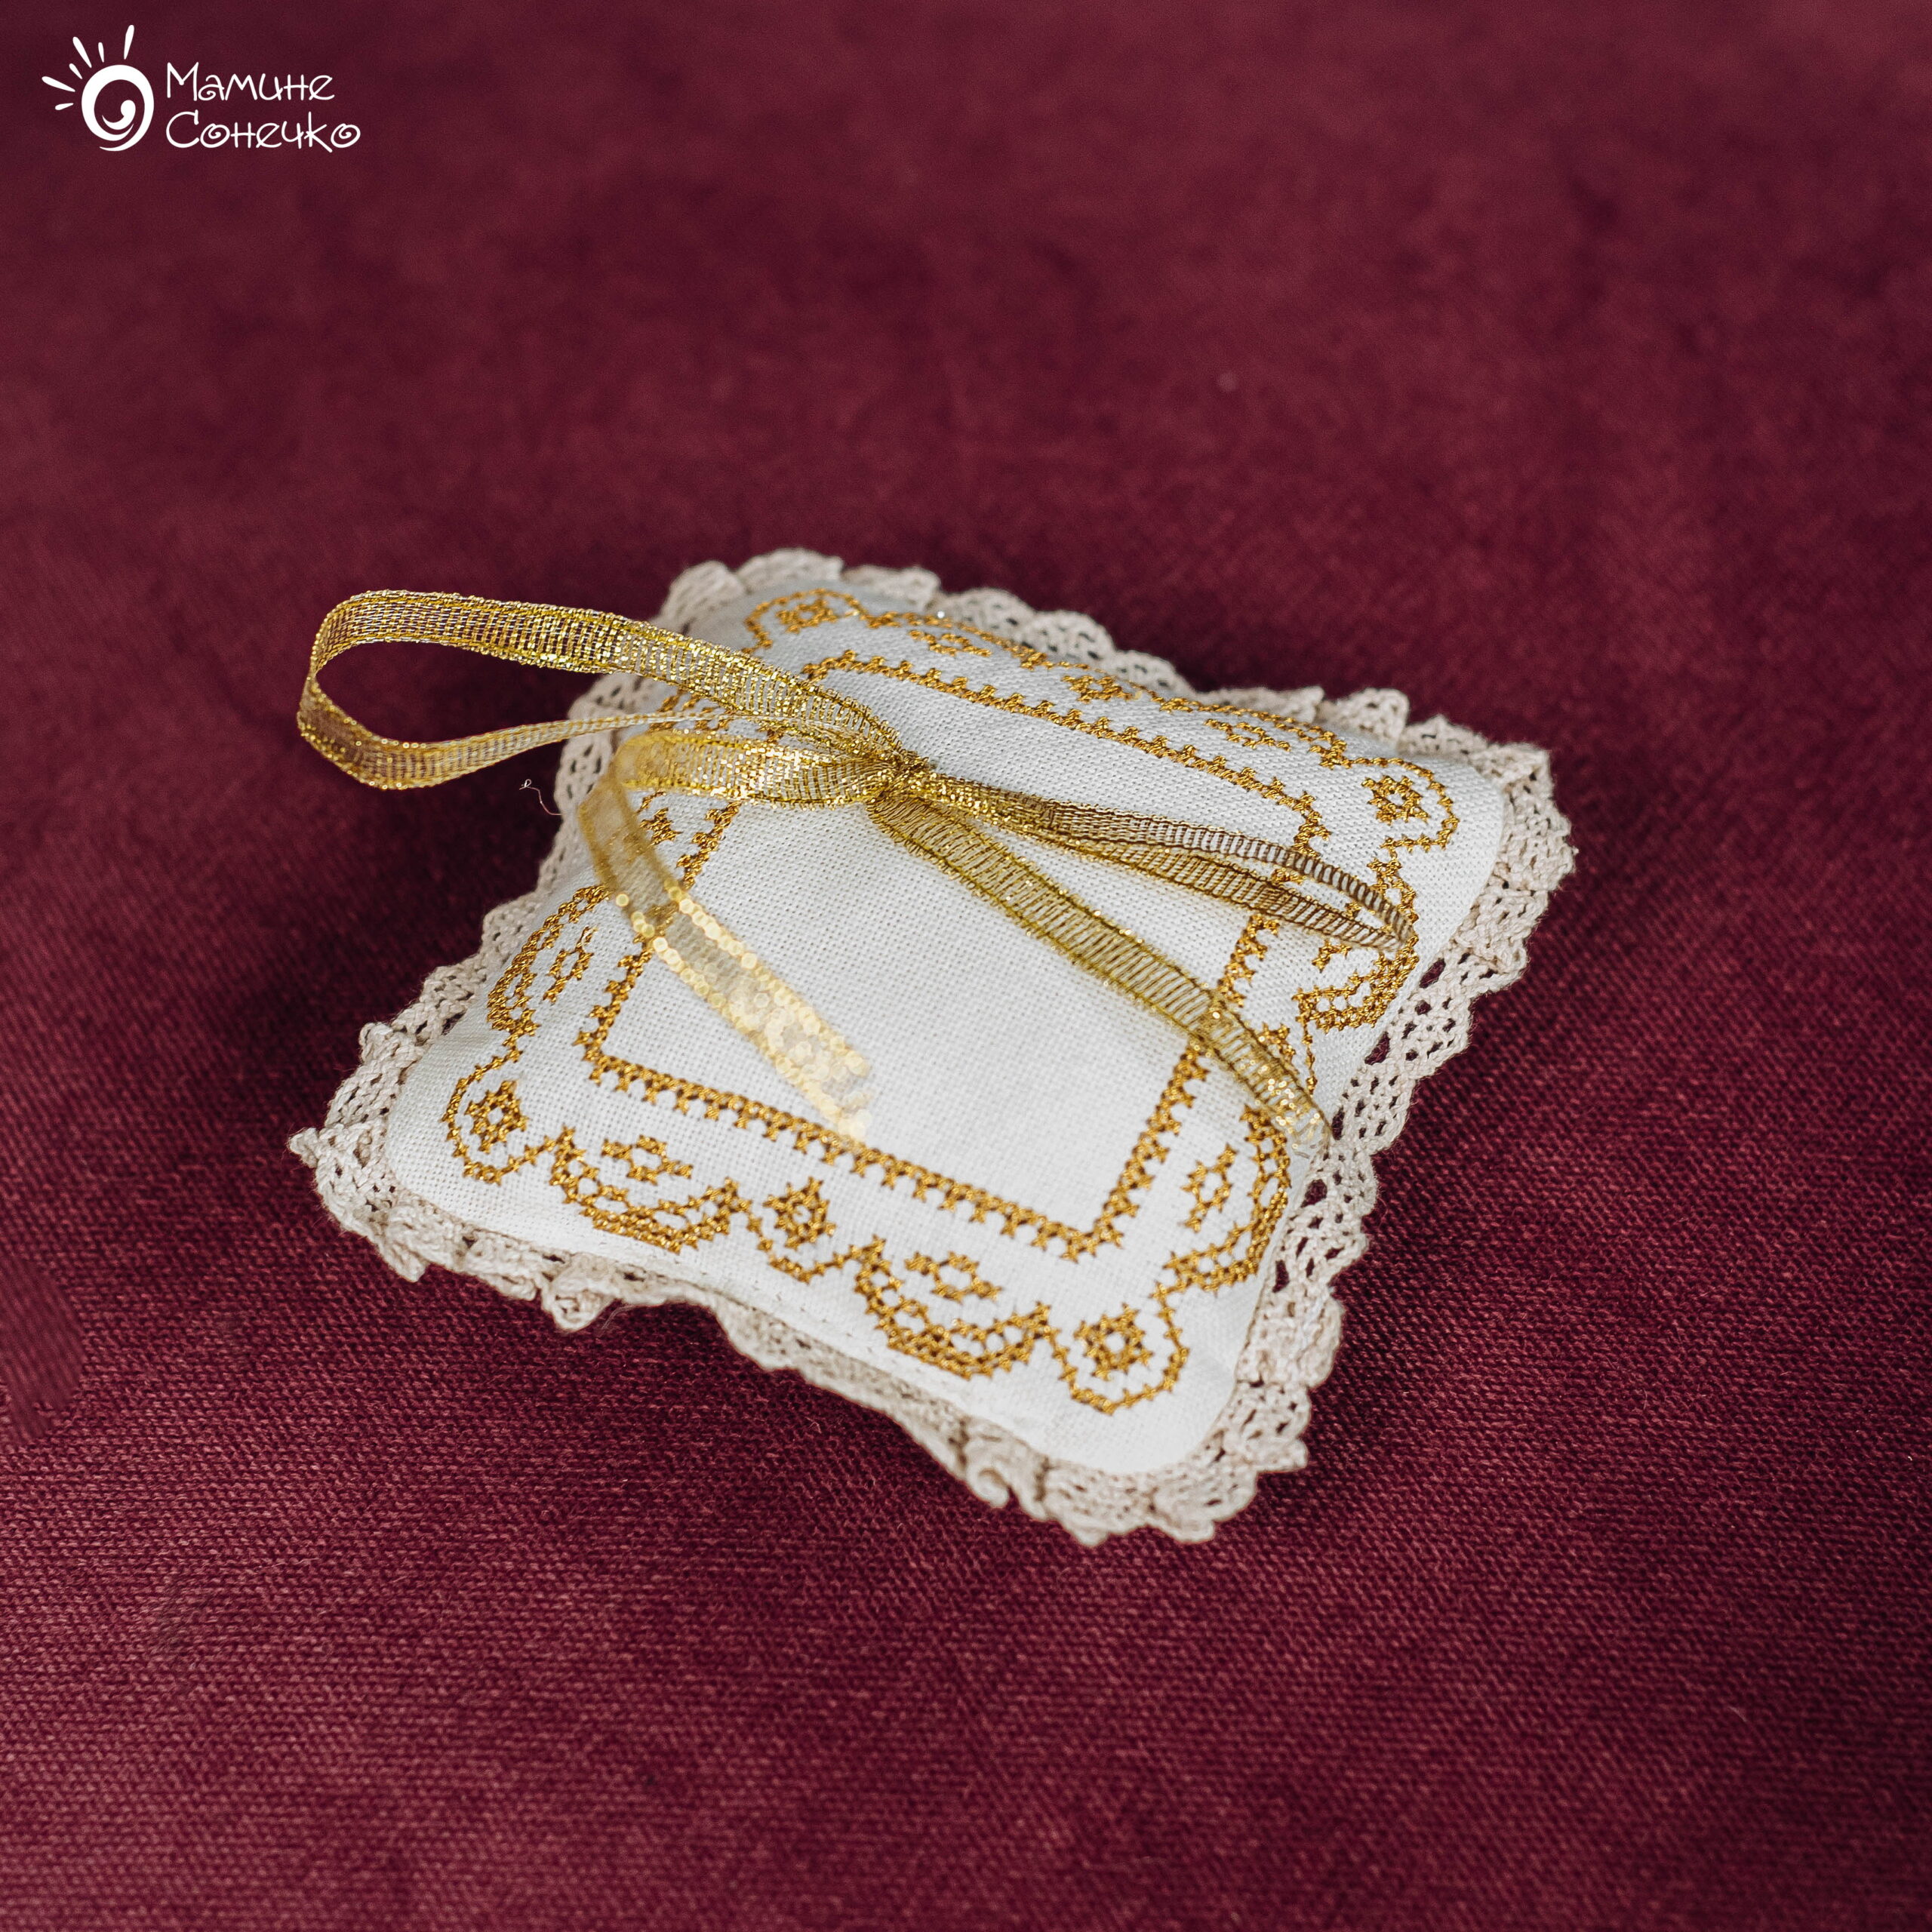 Cross stitch cushion “Monochrome” gold, ivory linen